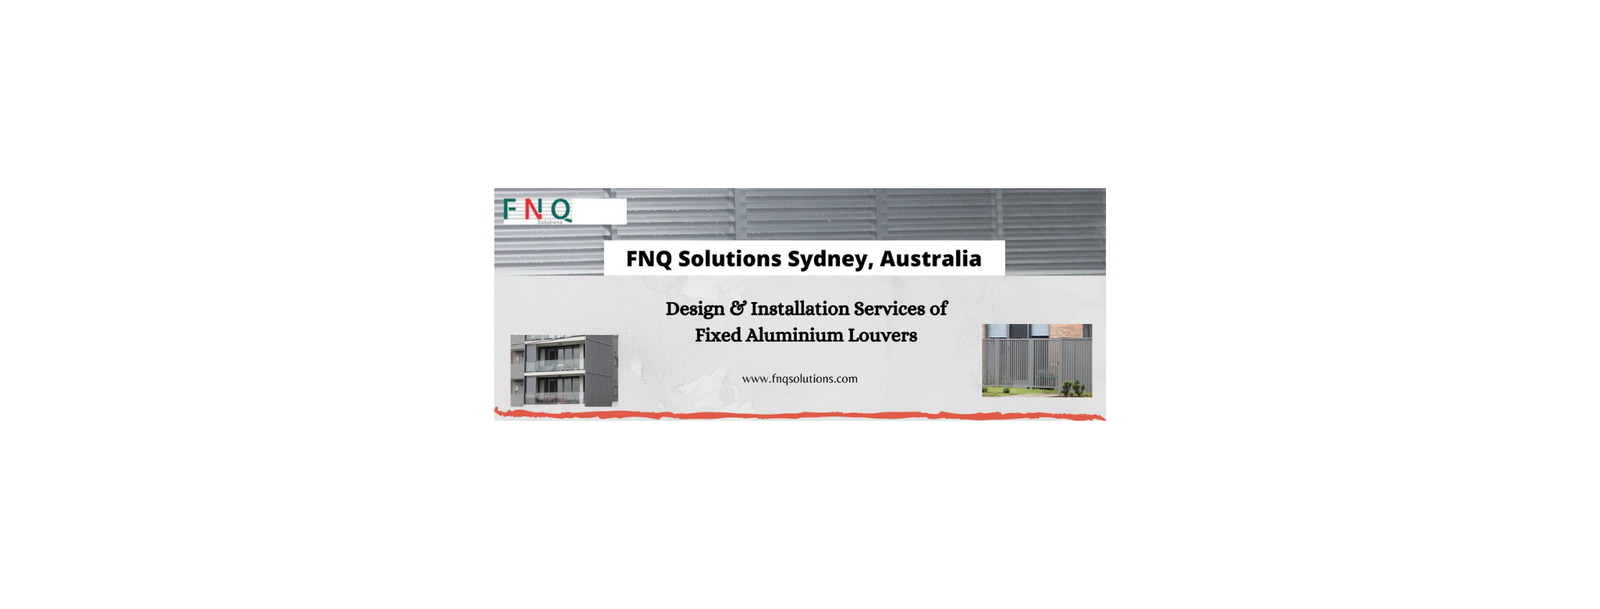 FNQ Solutions Sydney